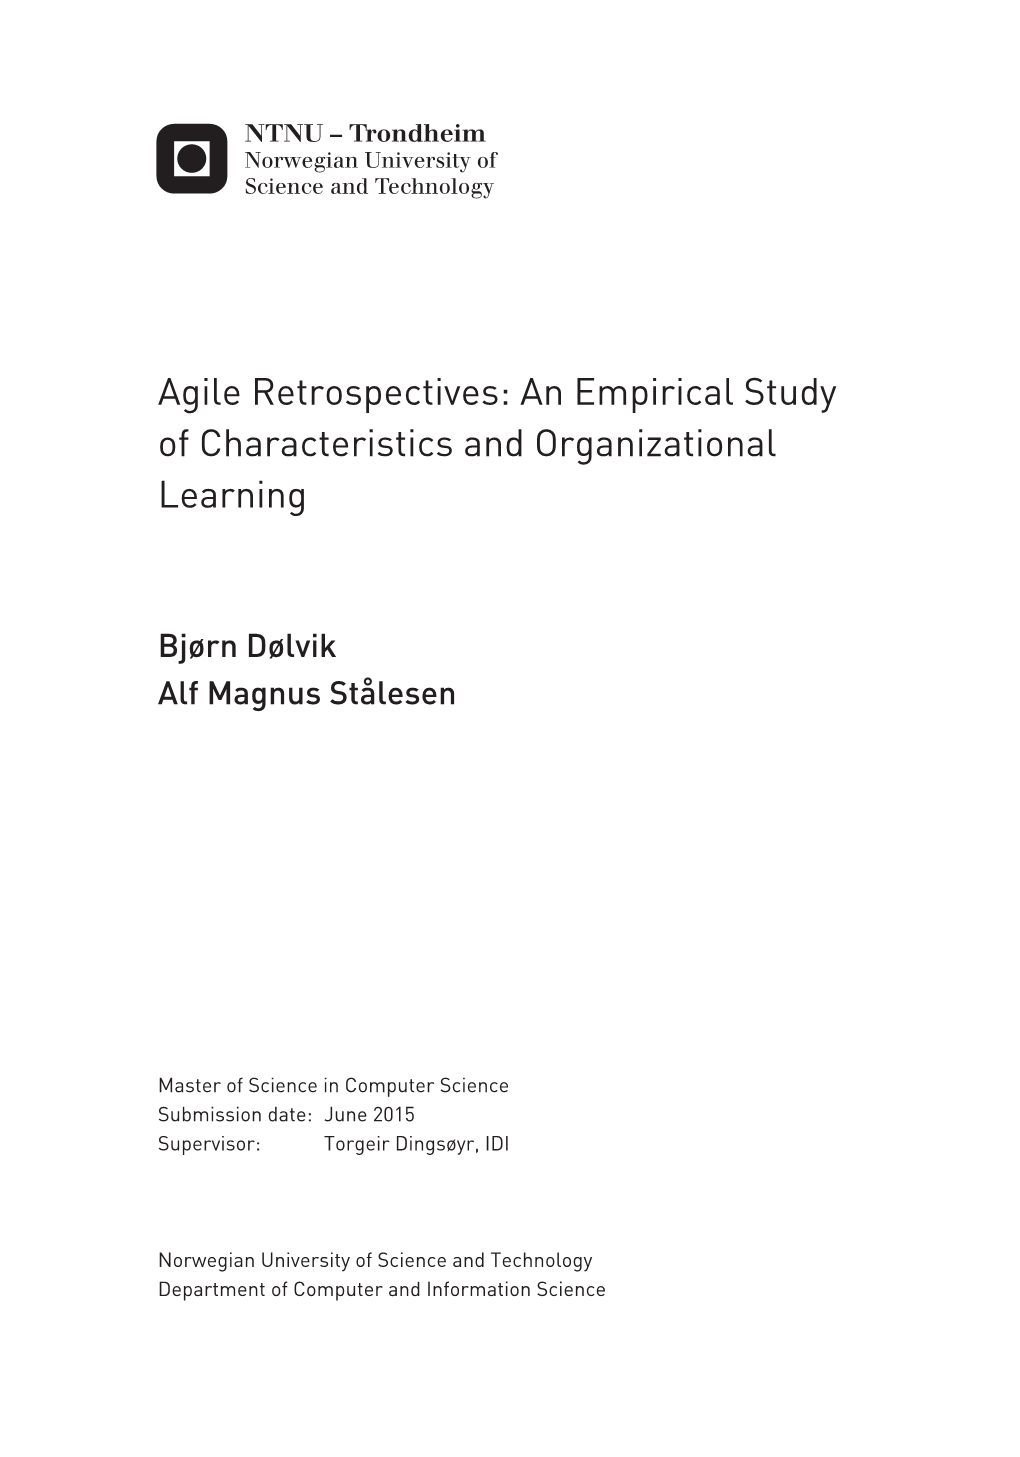 Agile Retrospectives: an Empirical Study of Characteristics and Organizational Learning